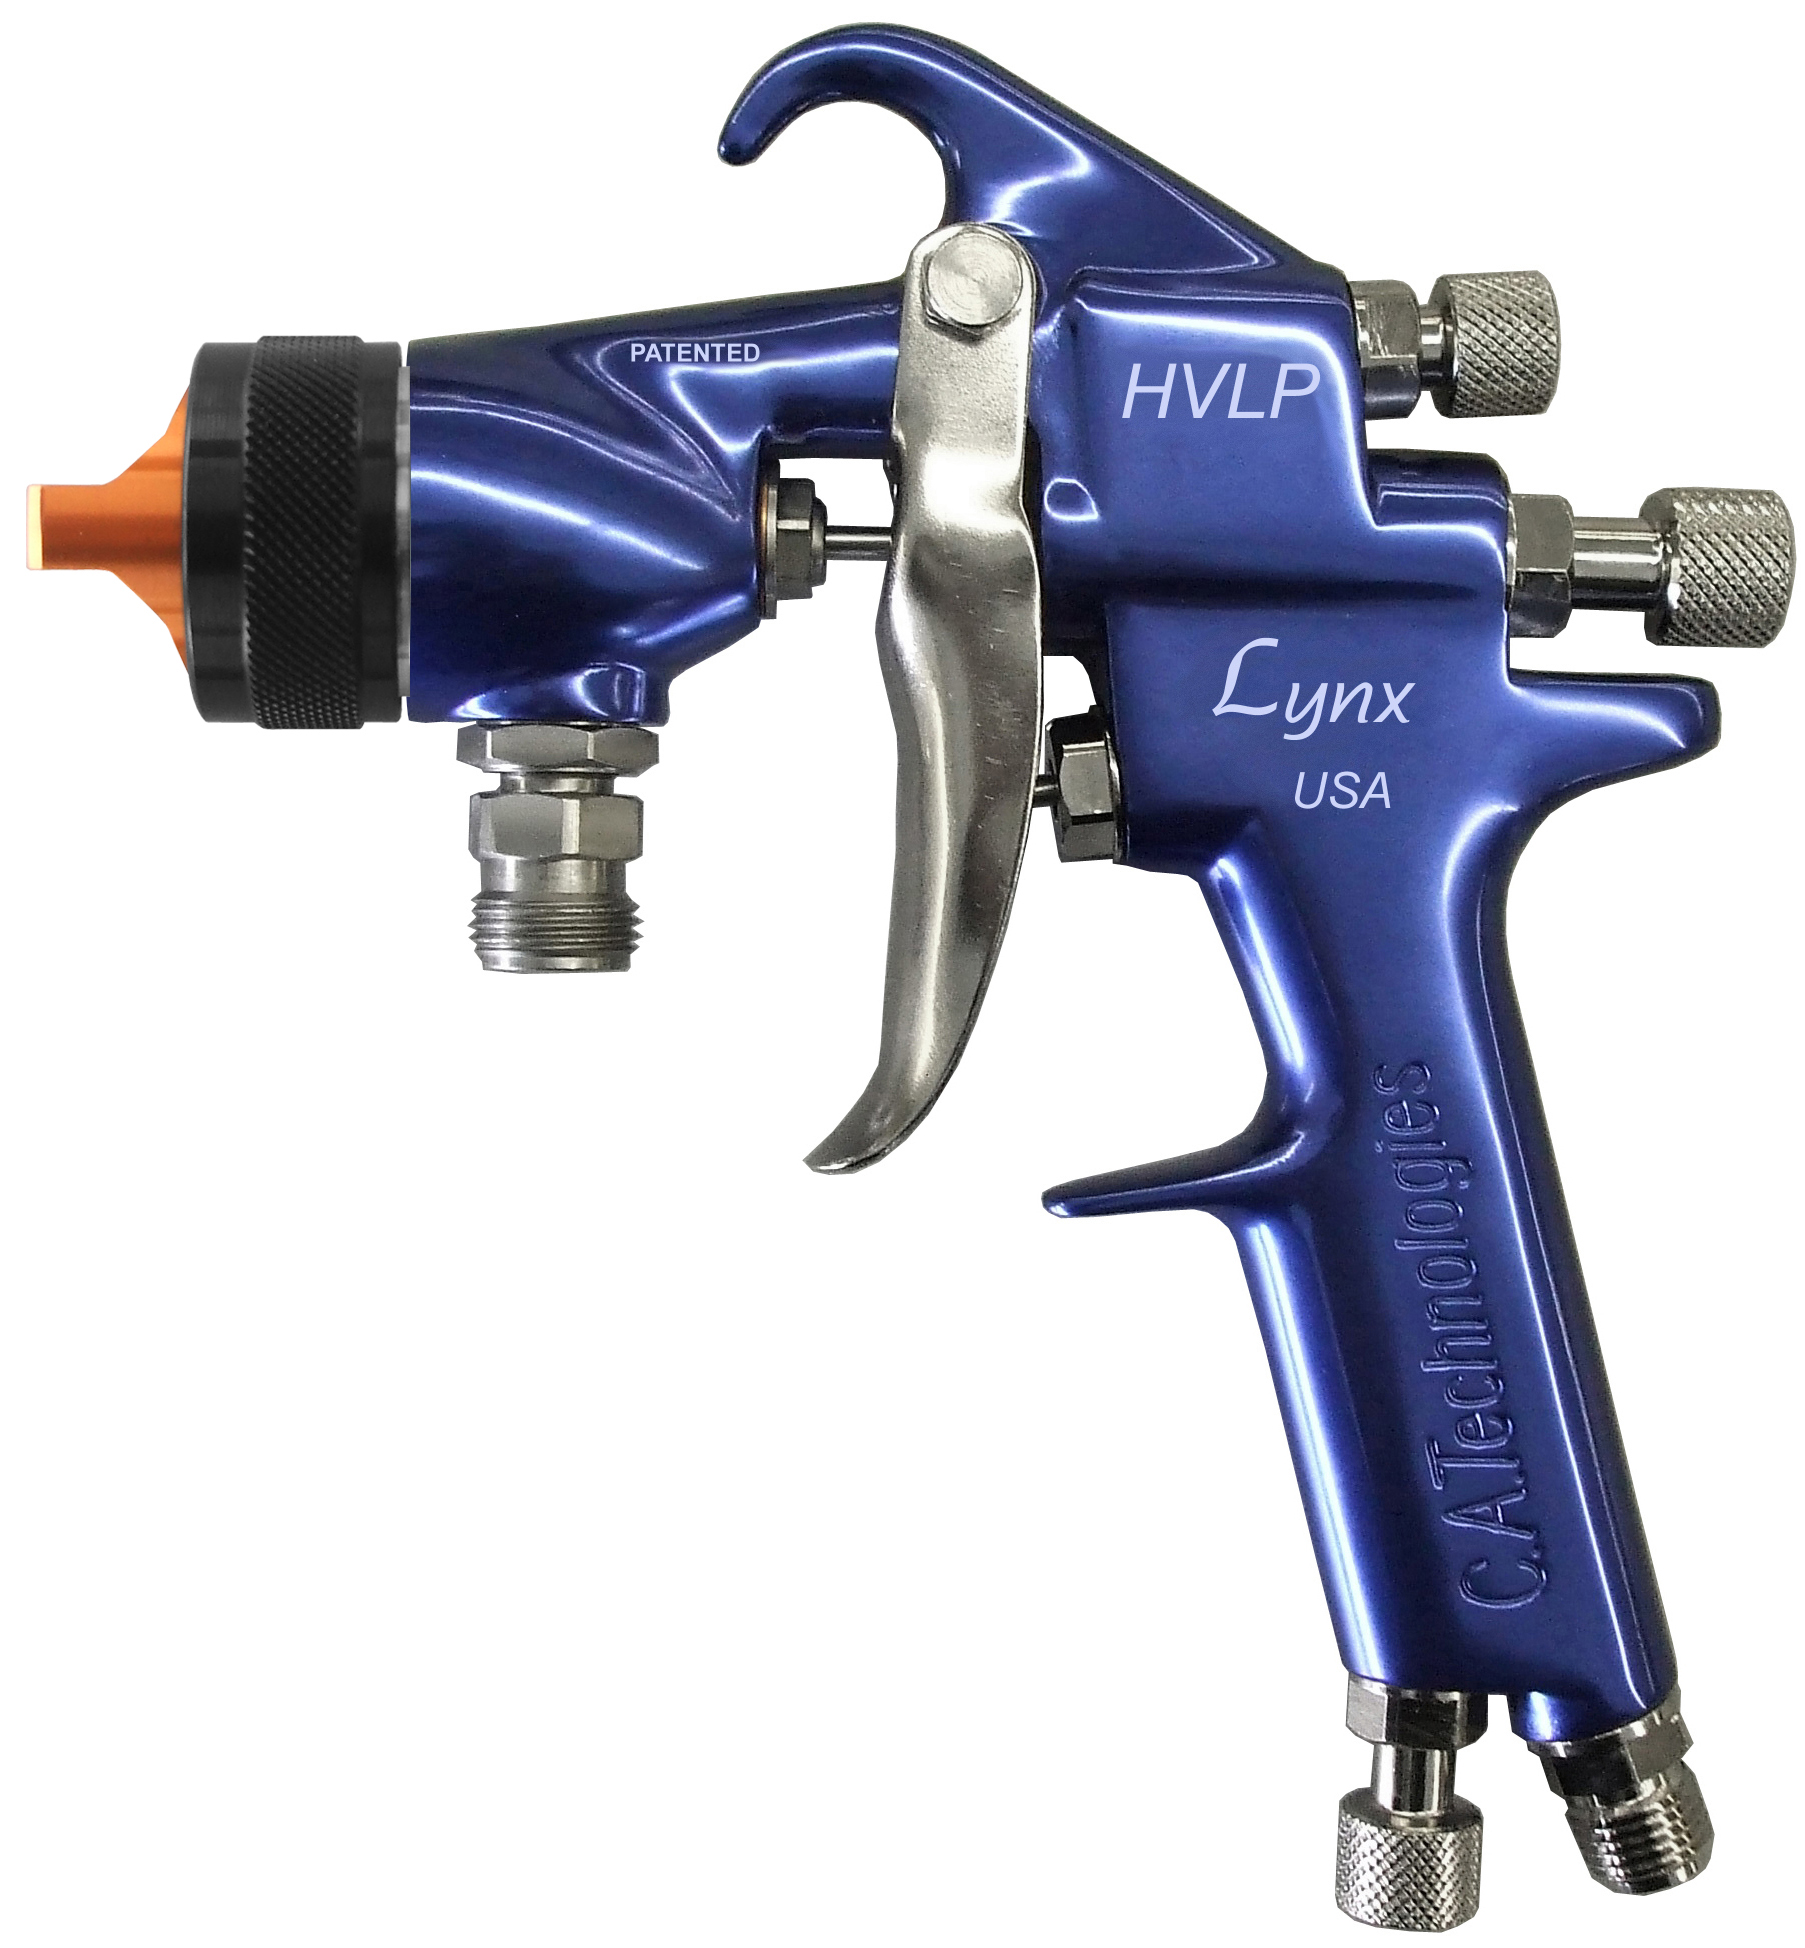 Deluxe Mini HVLP Spray Gun at